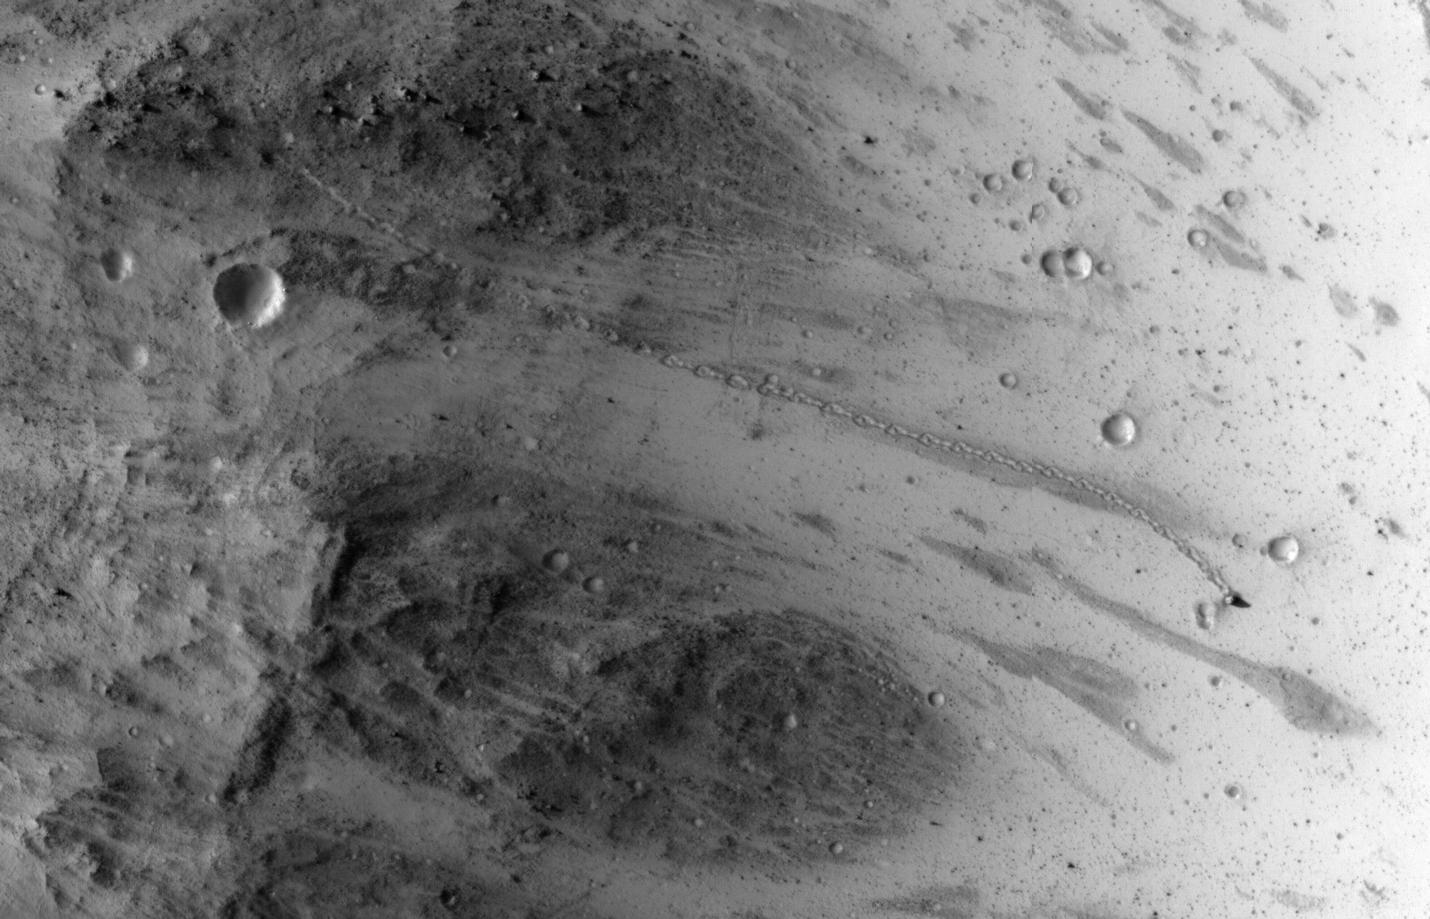 An Irregular, Upright Boulder on Mars